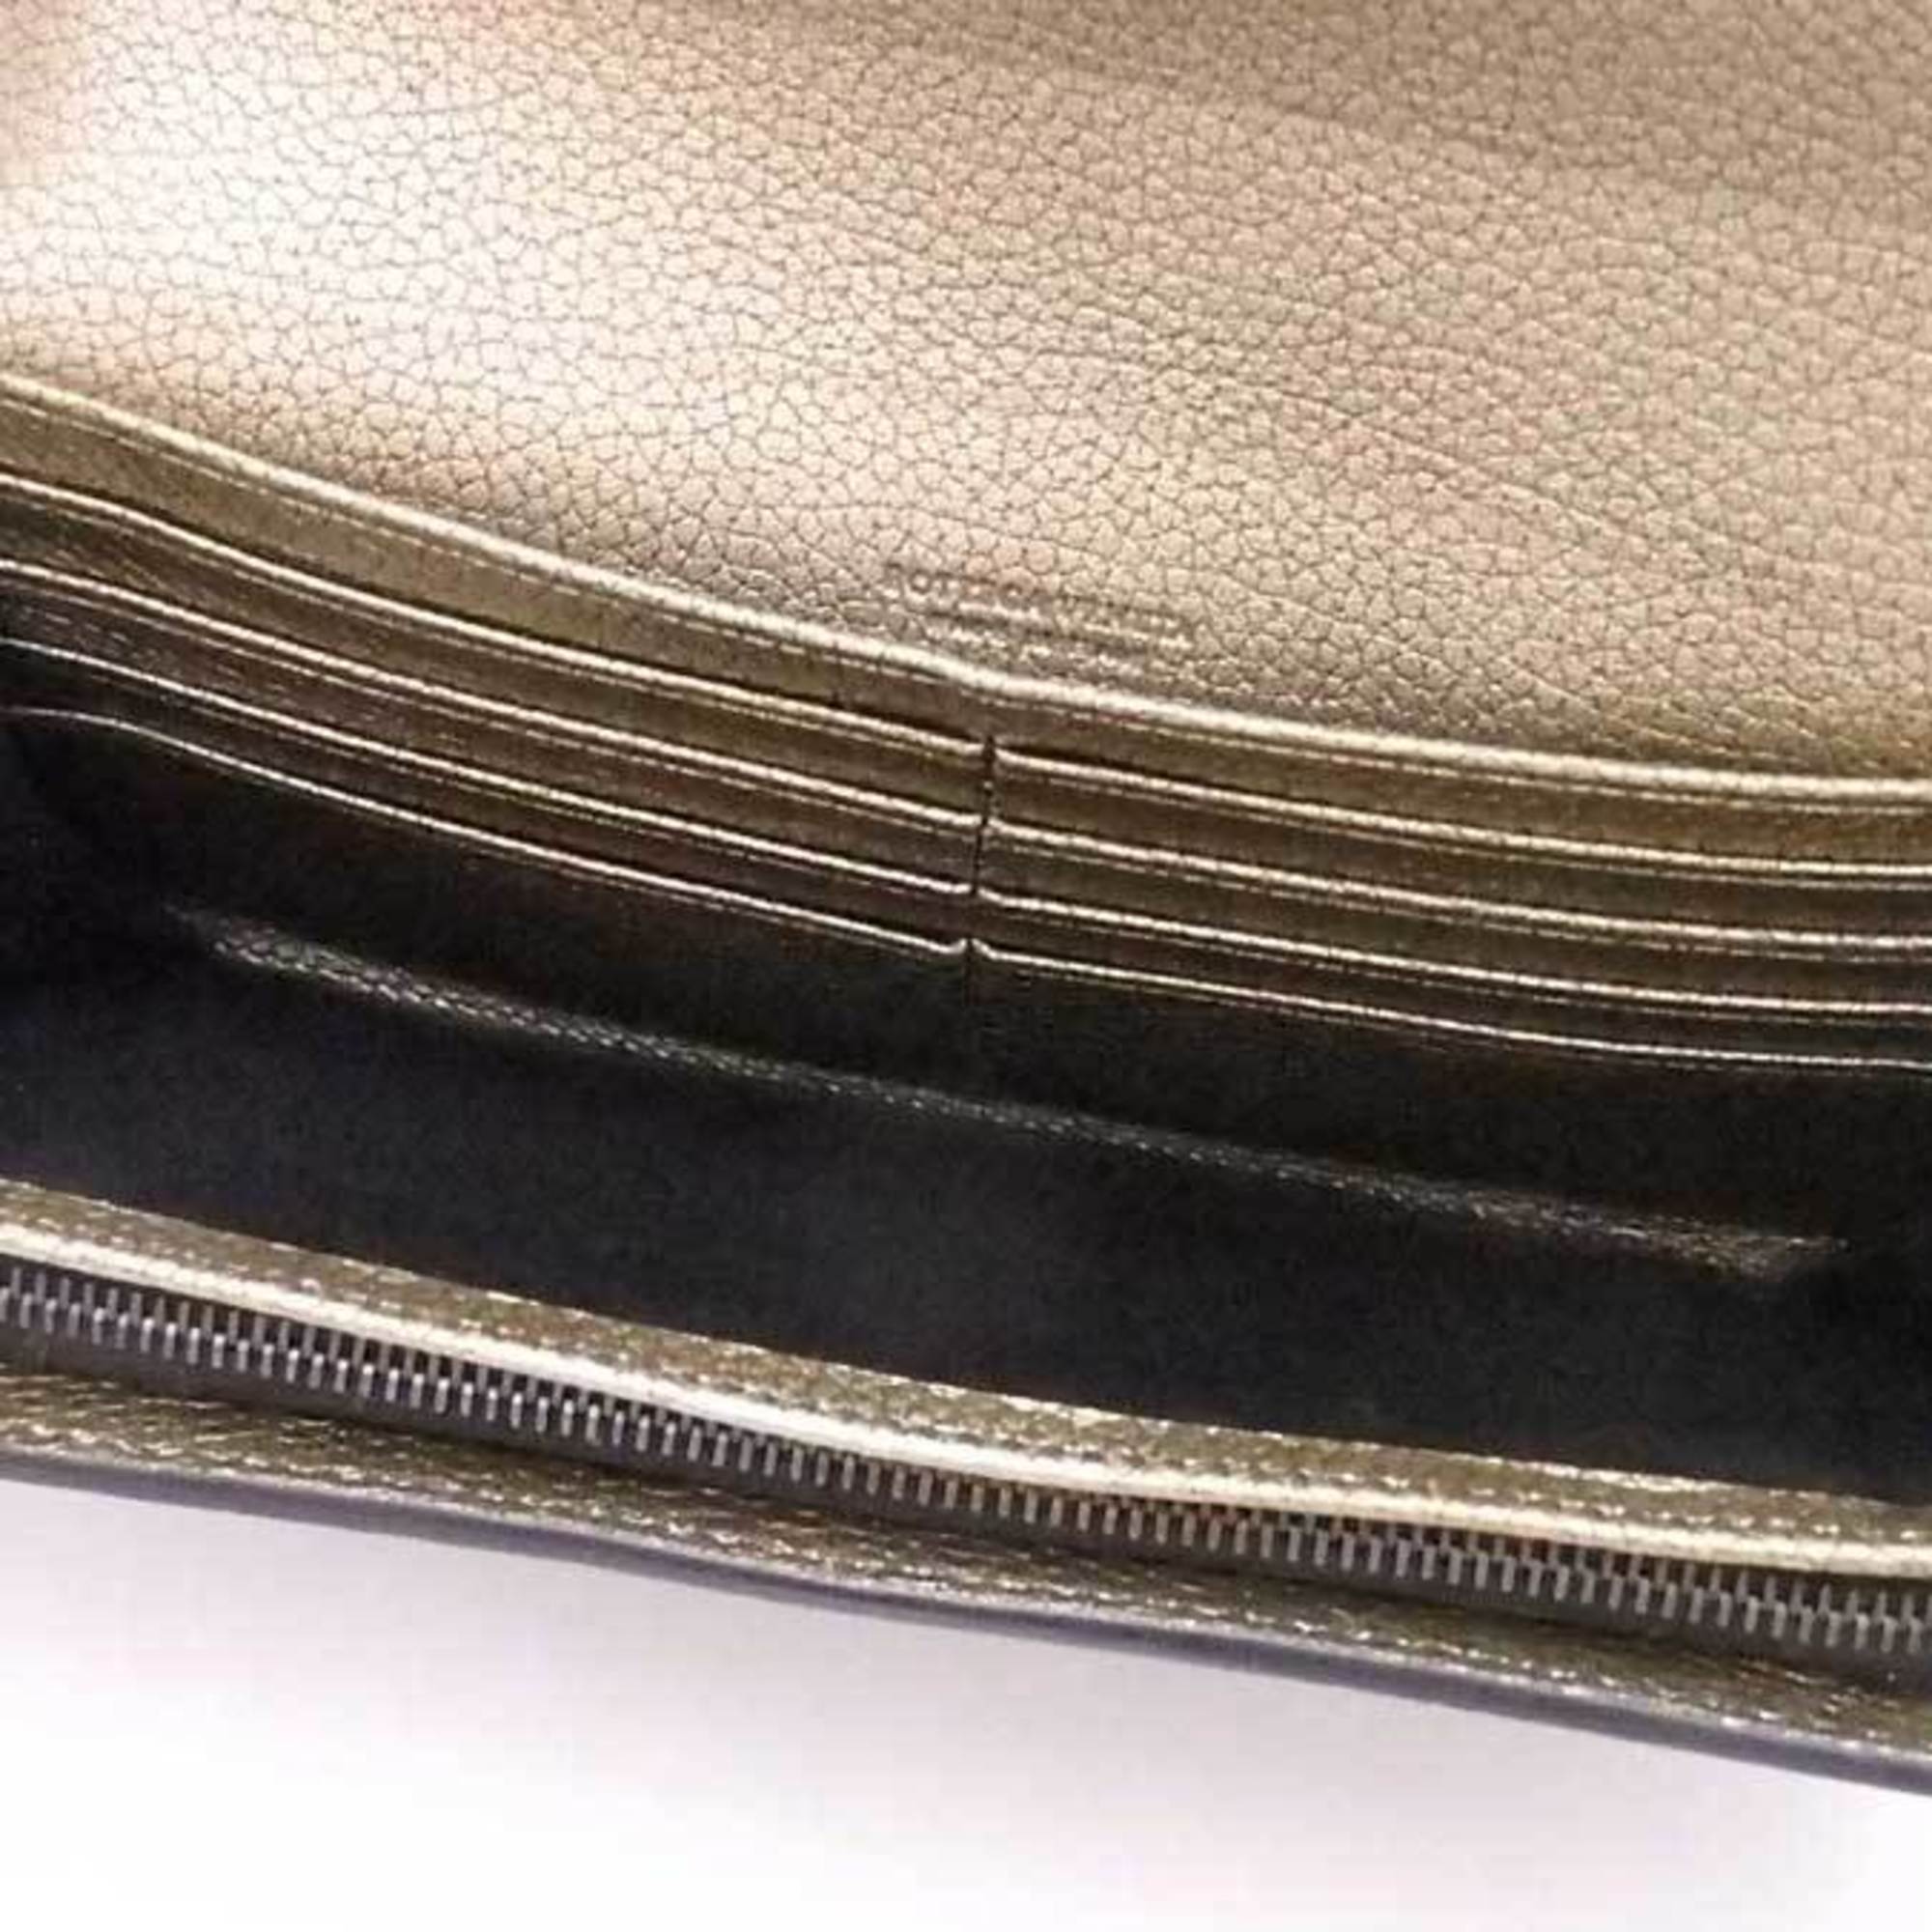 Bottega Veneta BOTTEGAVENETA long wallet intrecciato leather gold unisex